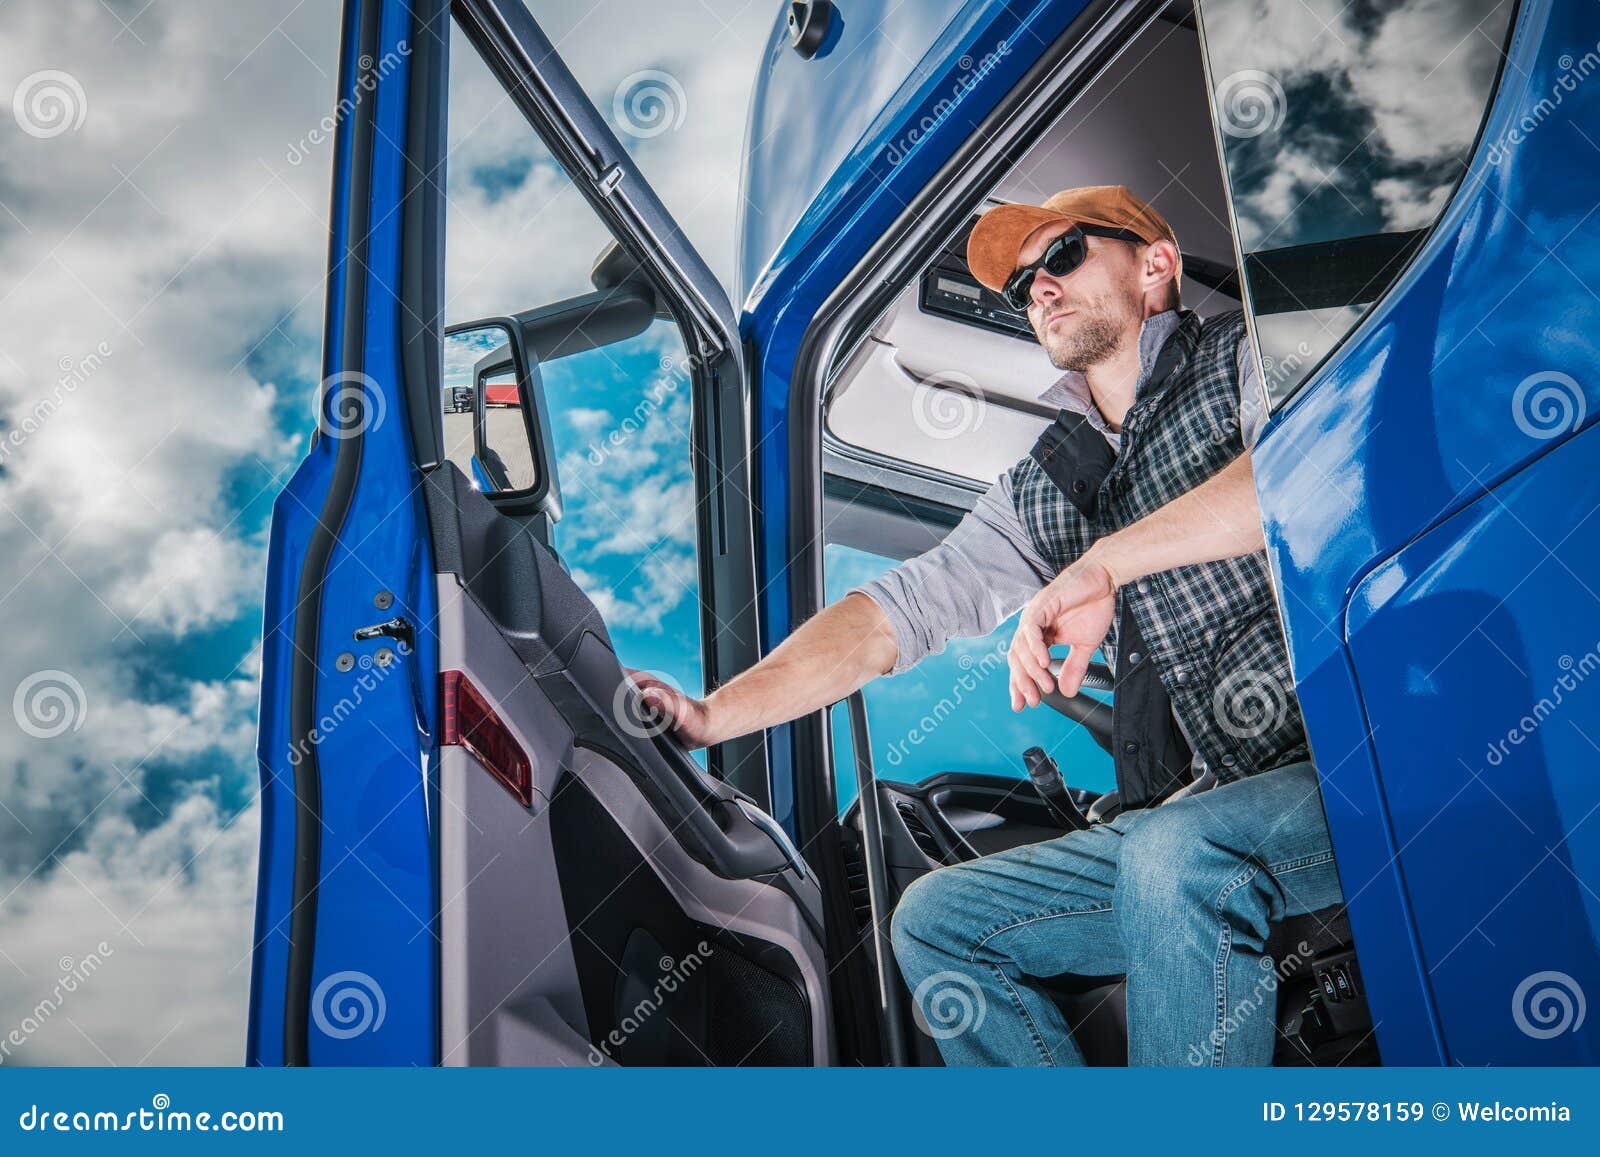 pro truck driver on duty